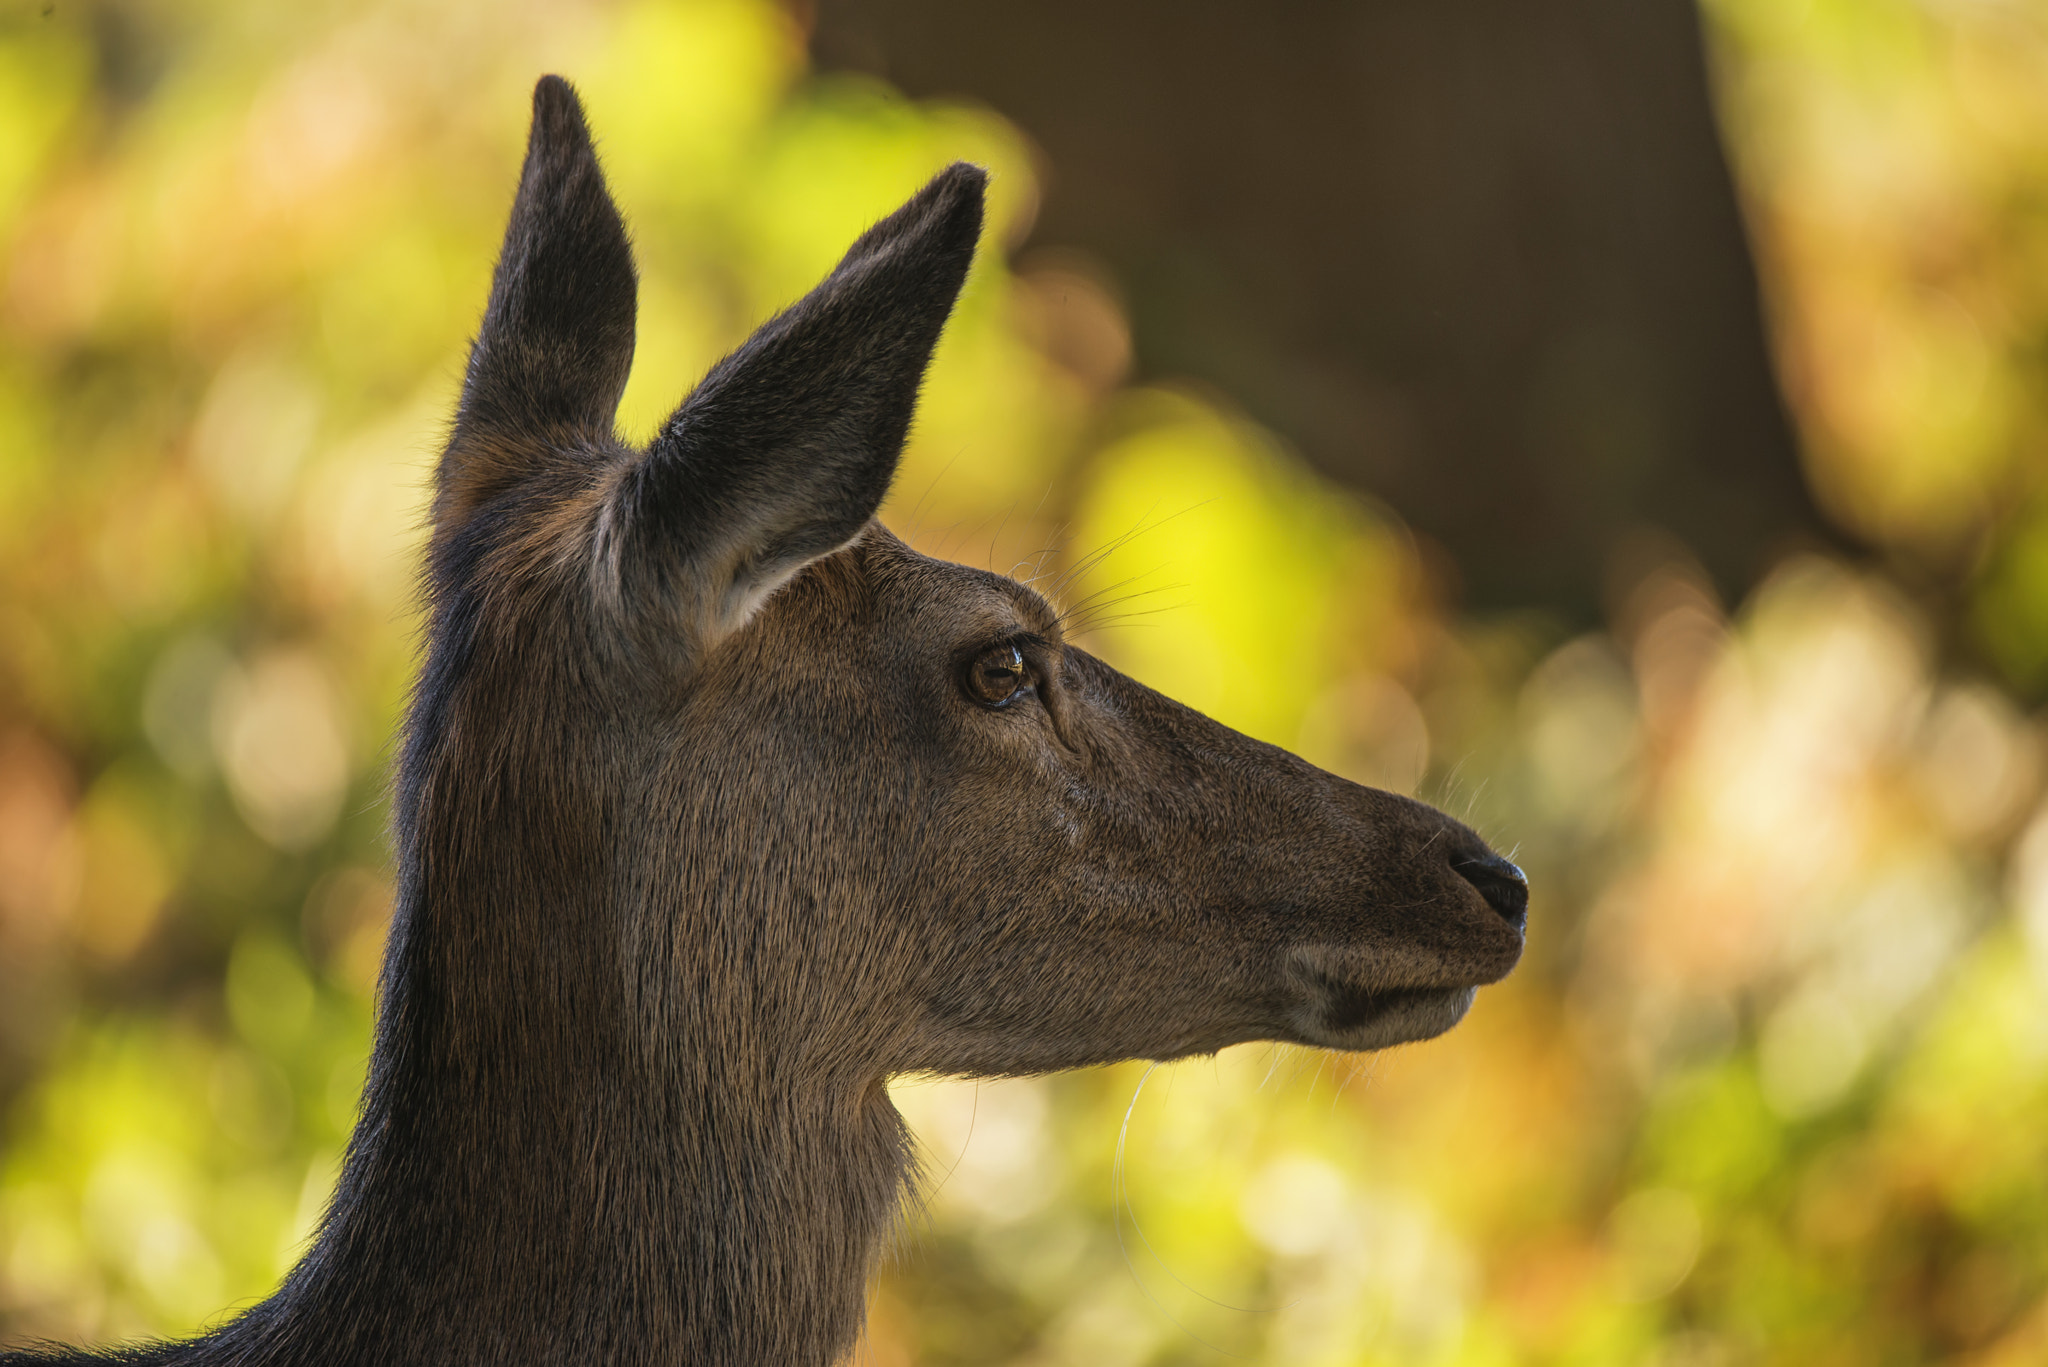 Nikon D800 + Sigma 150-600mm F5-6.3 DG OS HSM | C sample photo. Stunning hind doe red deer cervus elaphus in dappled sunlight fo photography